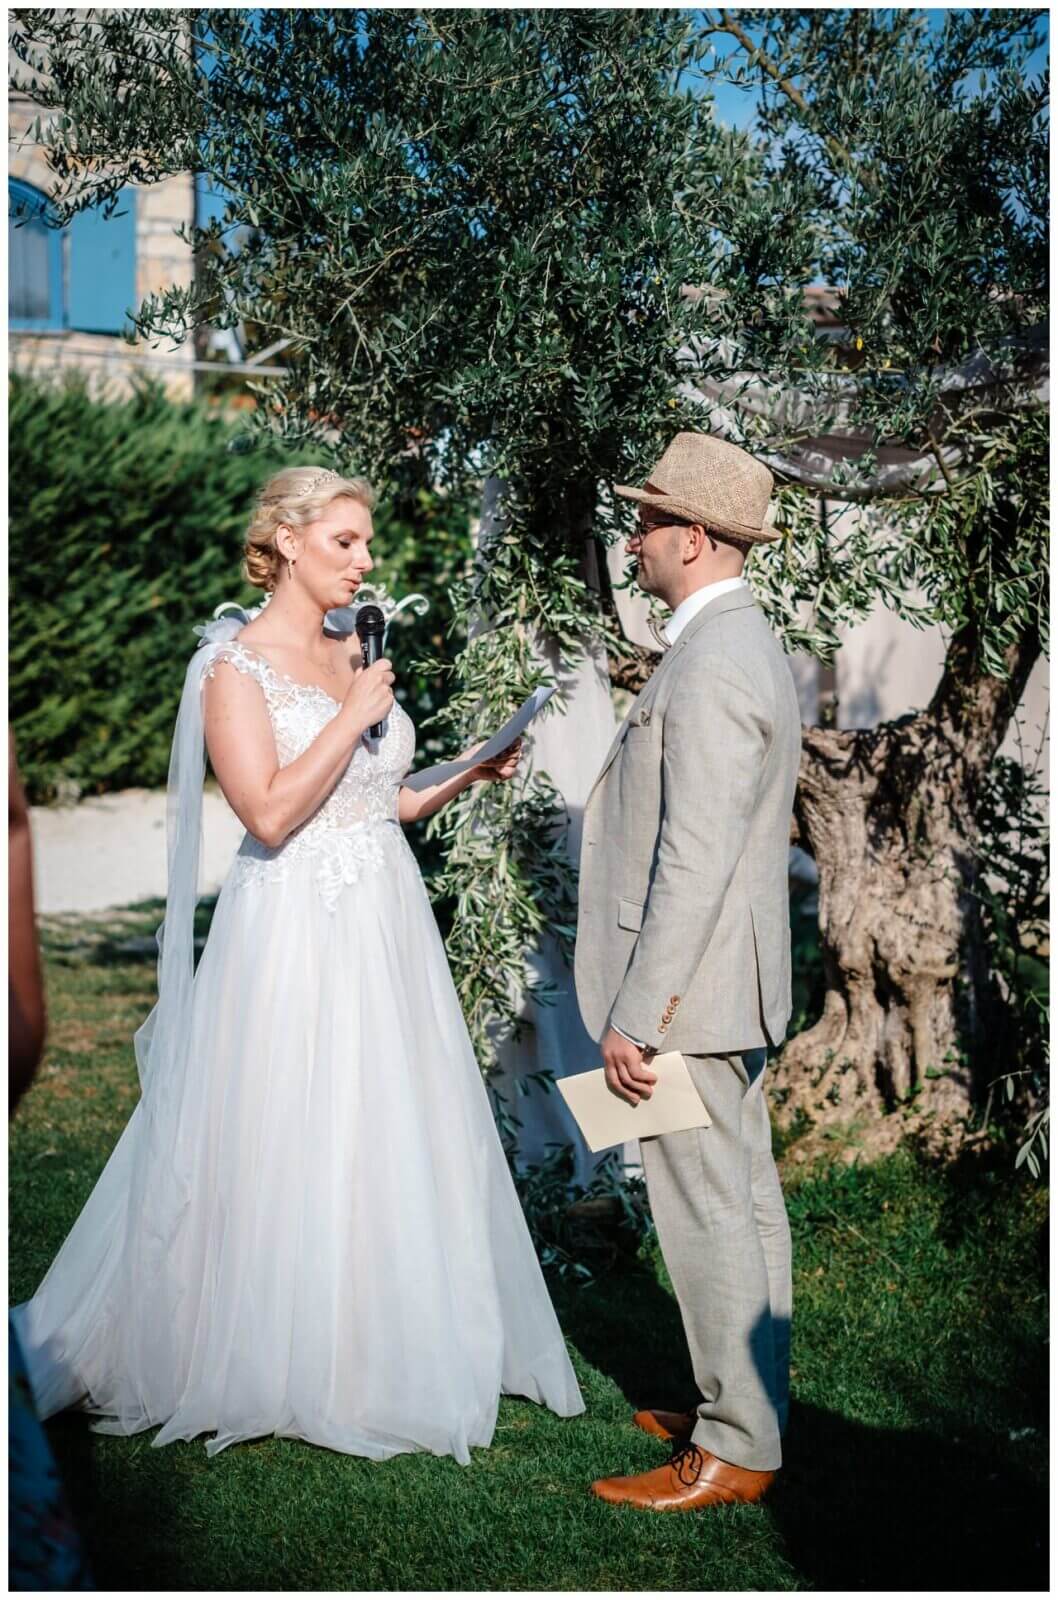 Freie Trauung Brautpaar Kroatien Wedding Kroatien, wedding in croatia,hochzeitsplanerin kroatien, hochzeit in kroatien